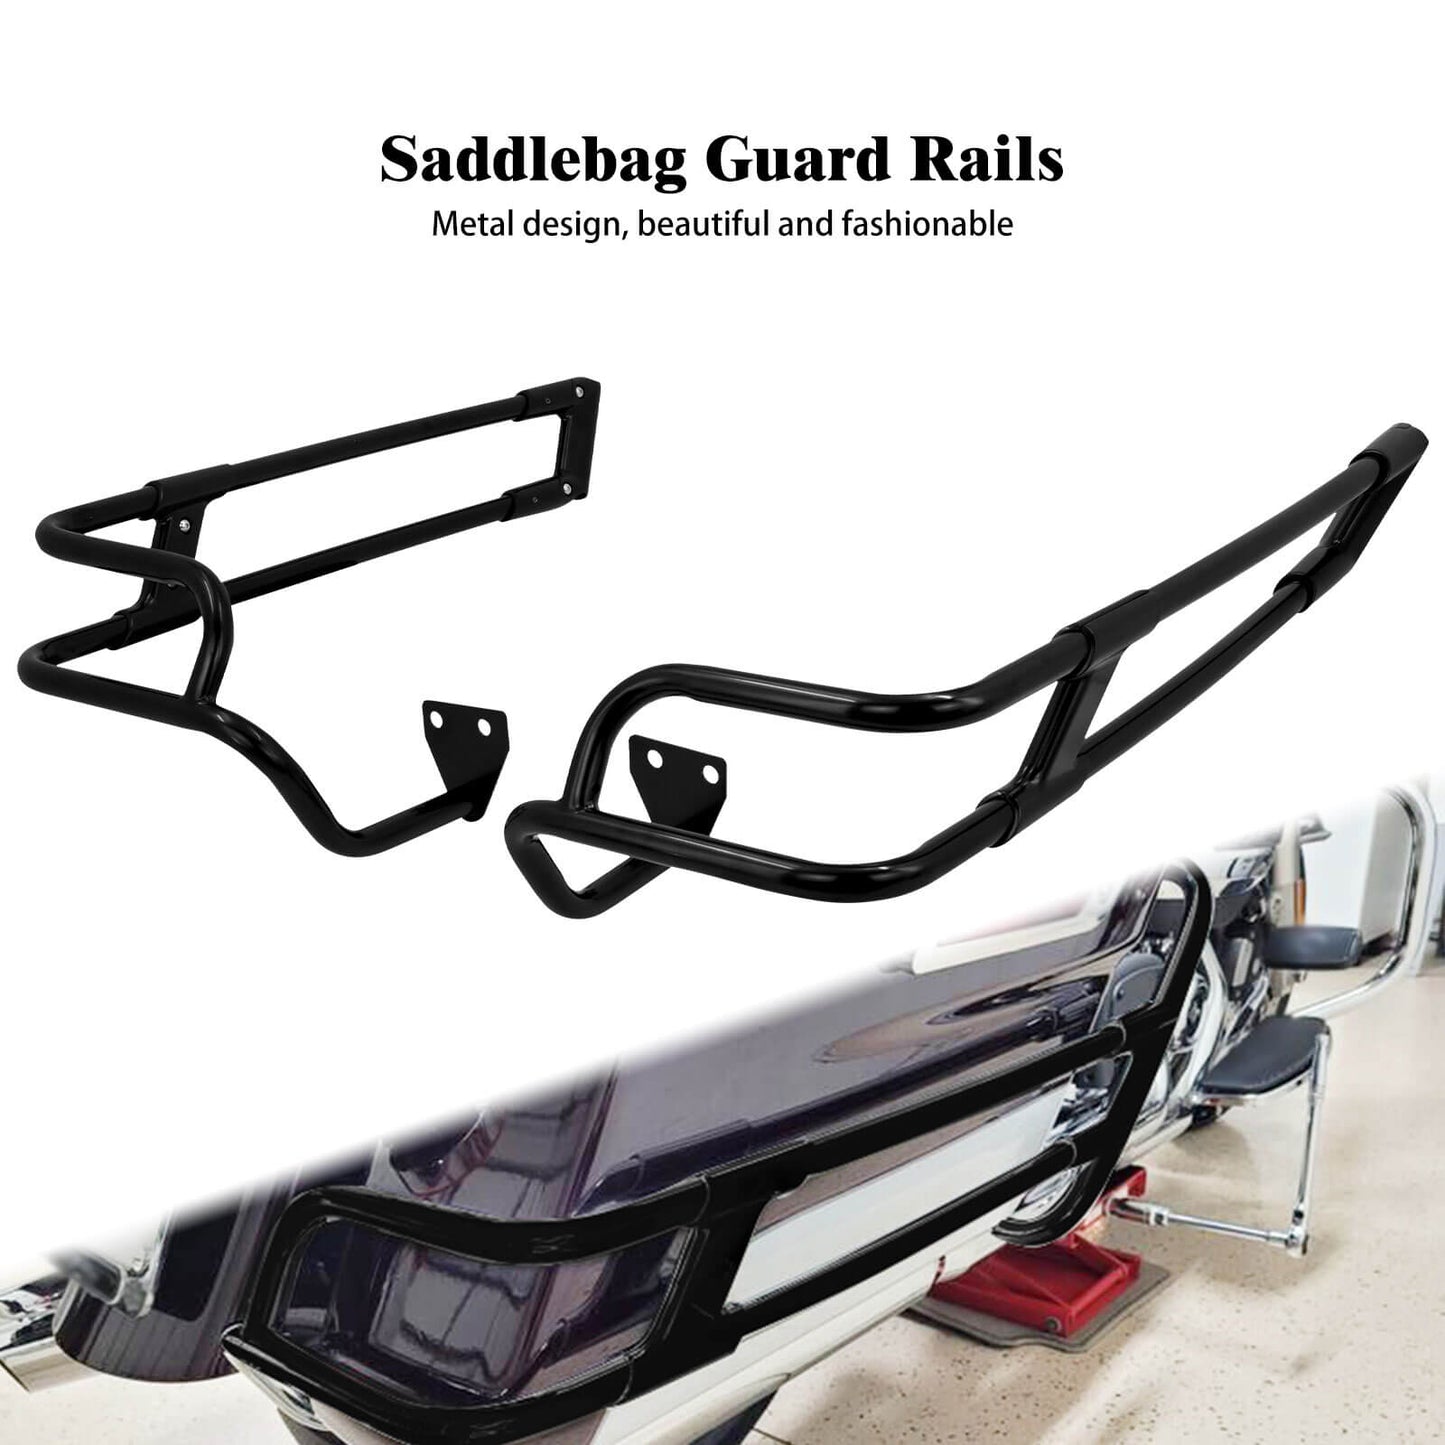 Mactions harley-davidson saddlebag guard rails TH029601